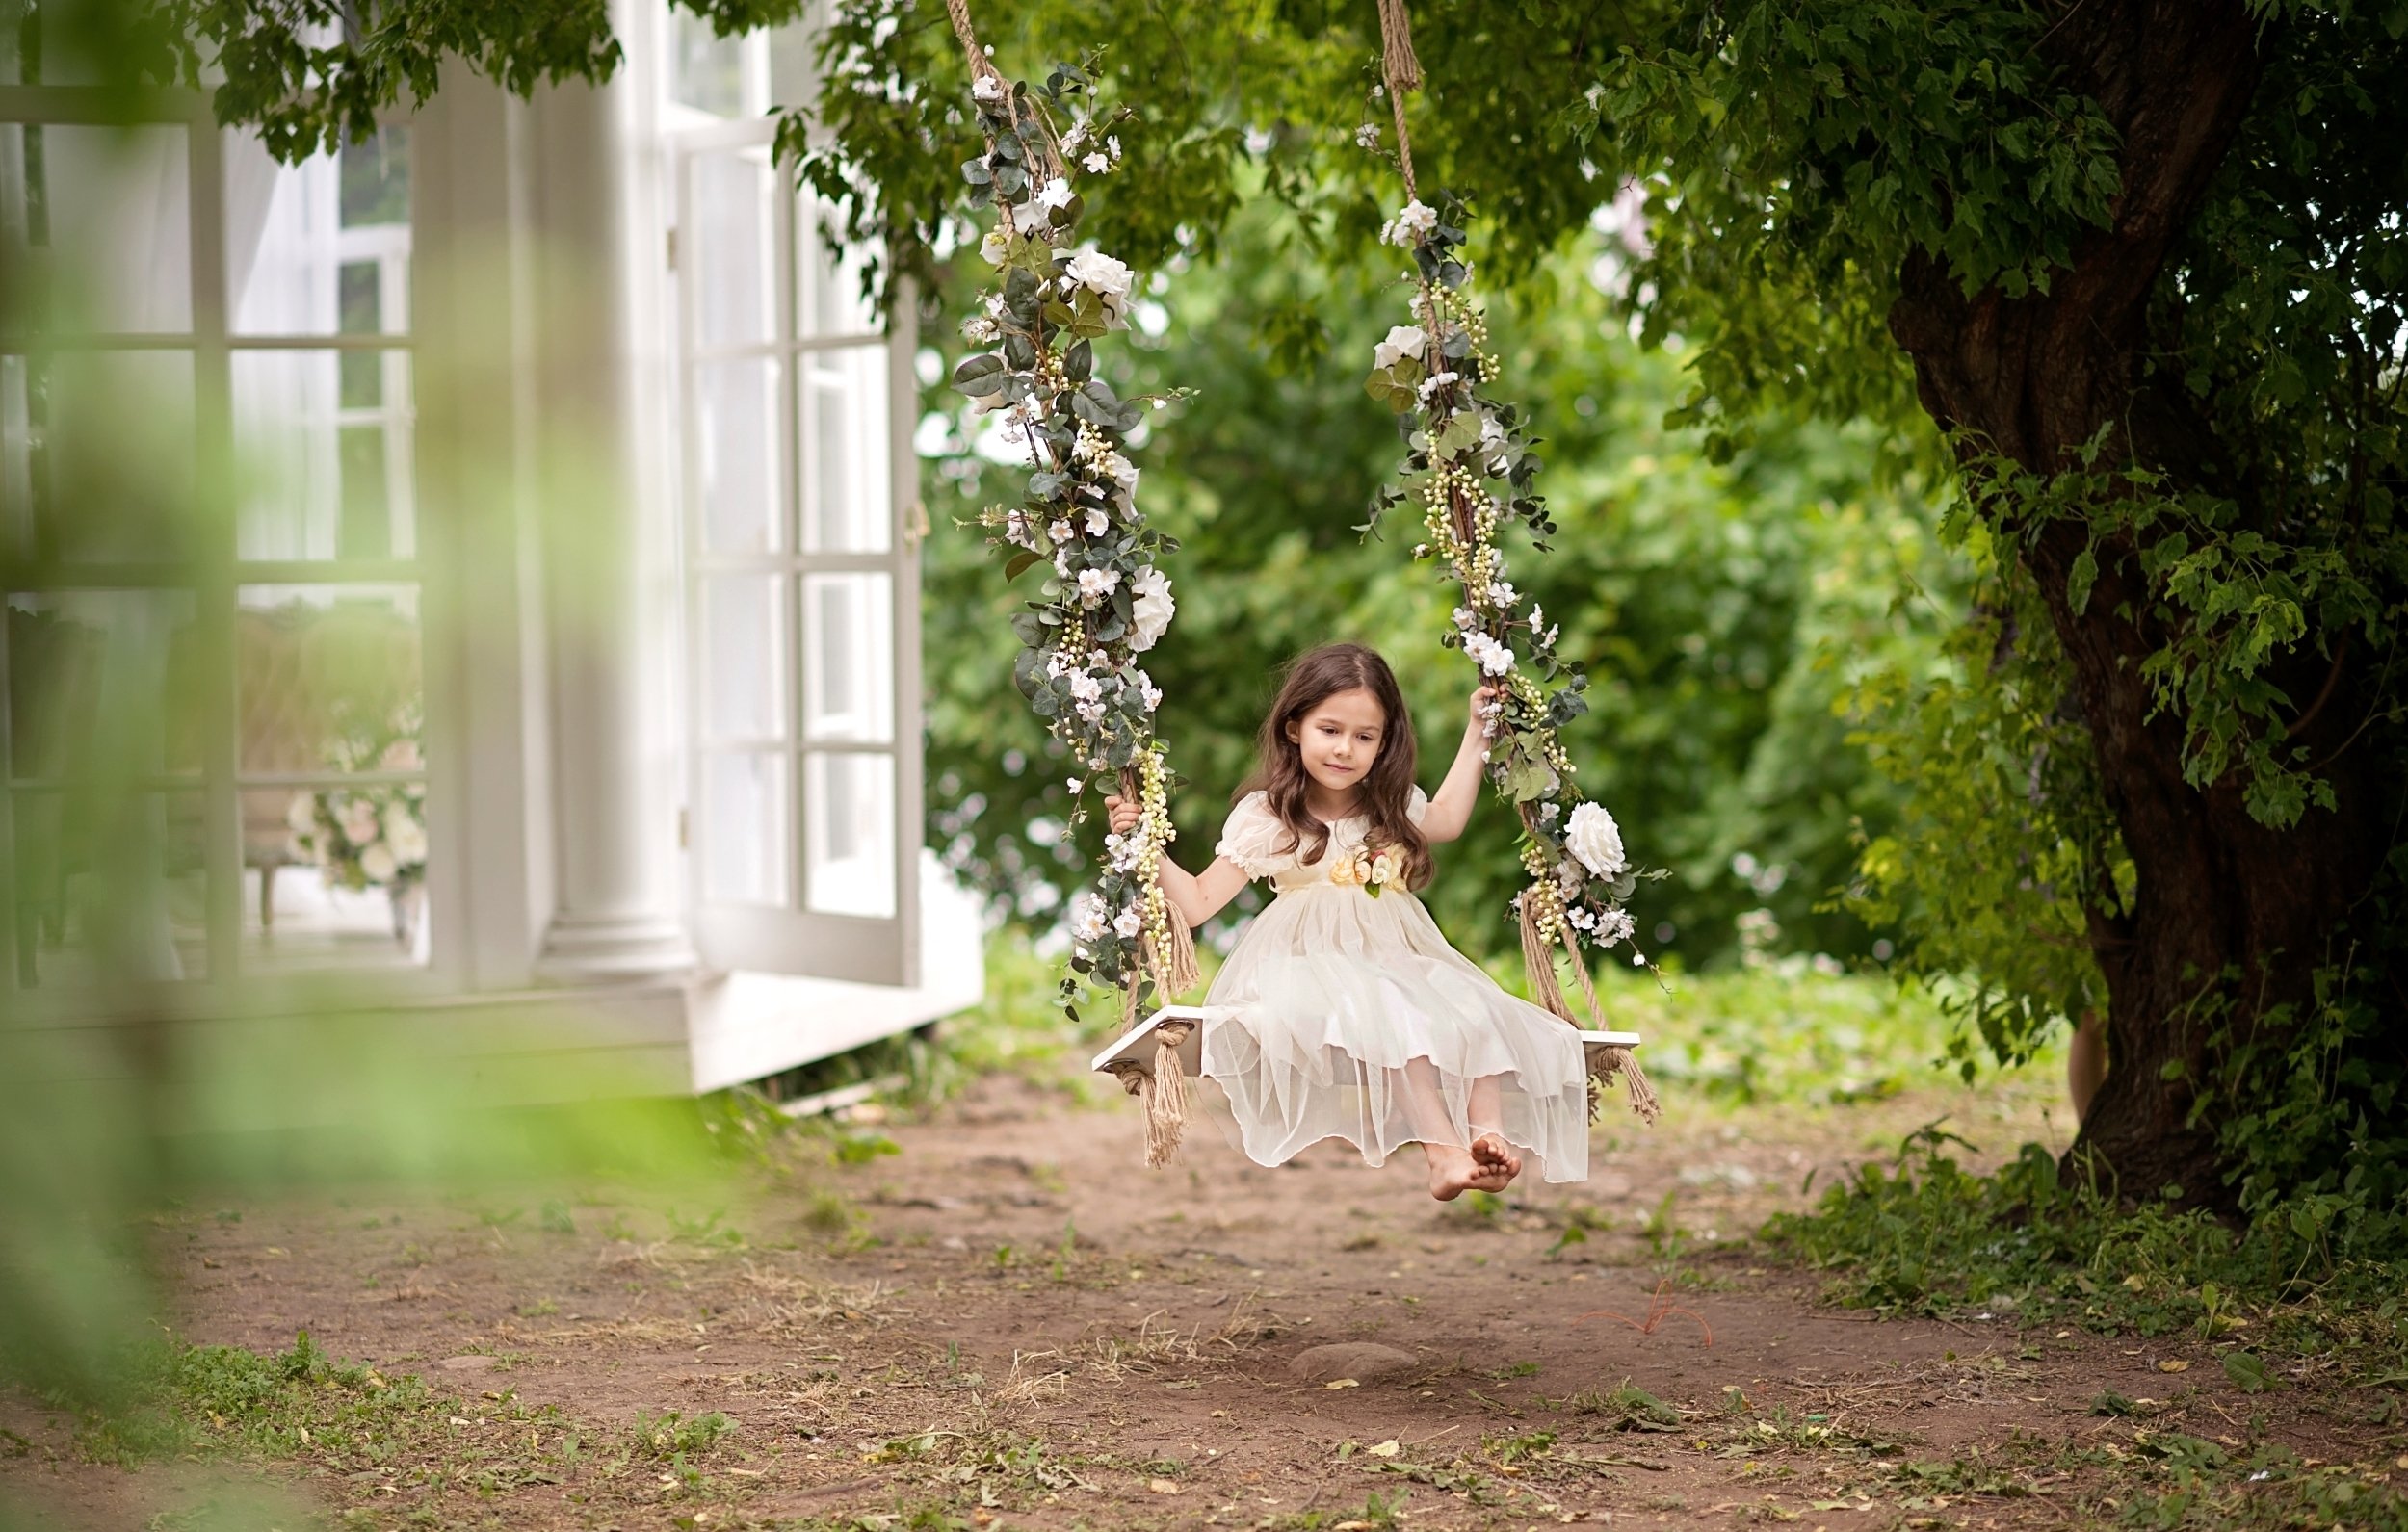 Игриво ласково. Качели в саду. Девушка на качелях. Весенние фотосессии на природе. Фотосъемка в саду.